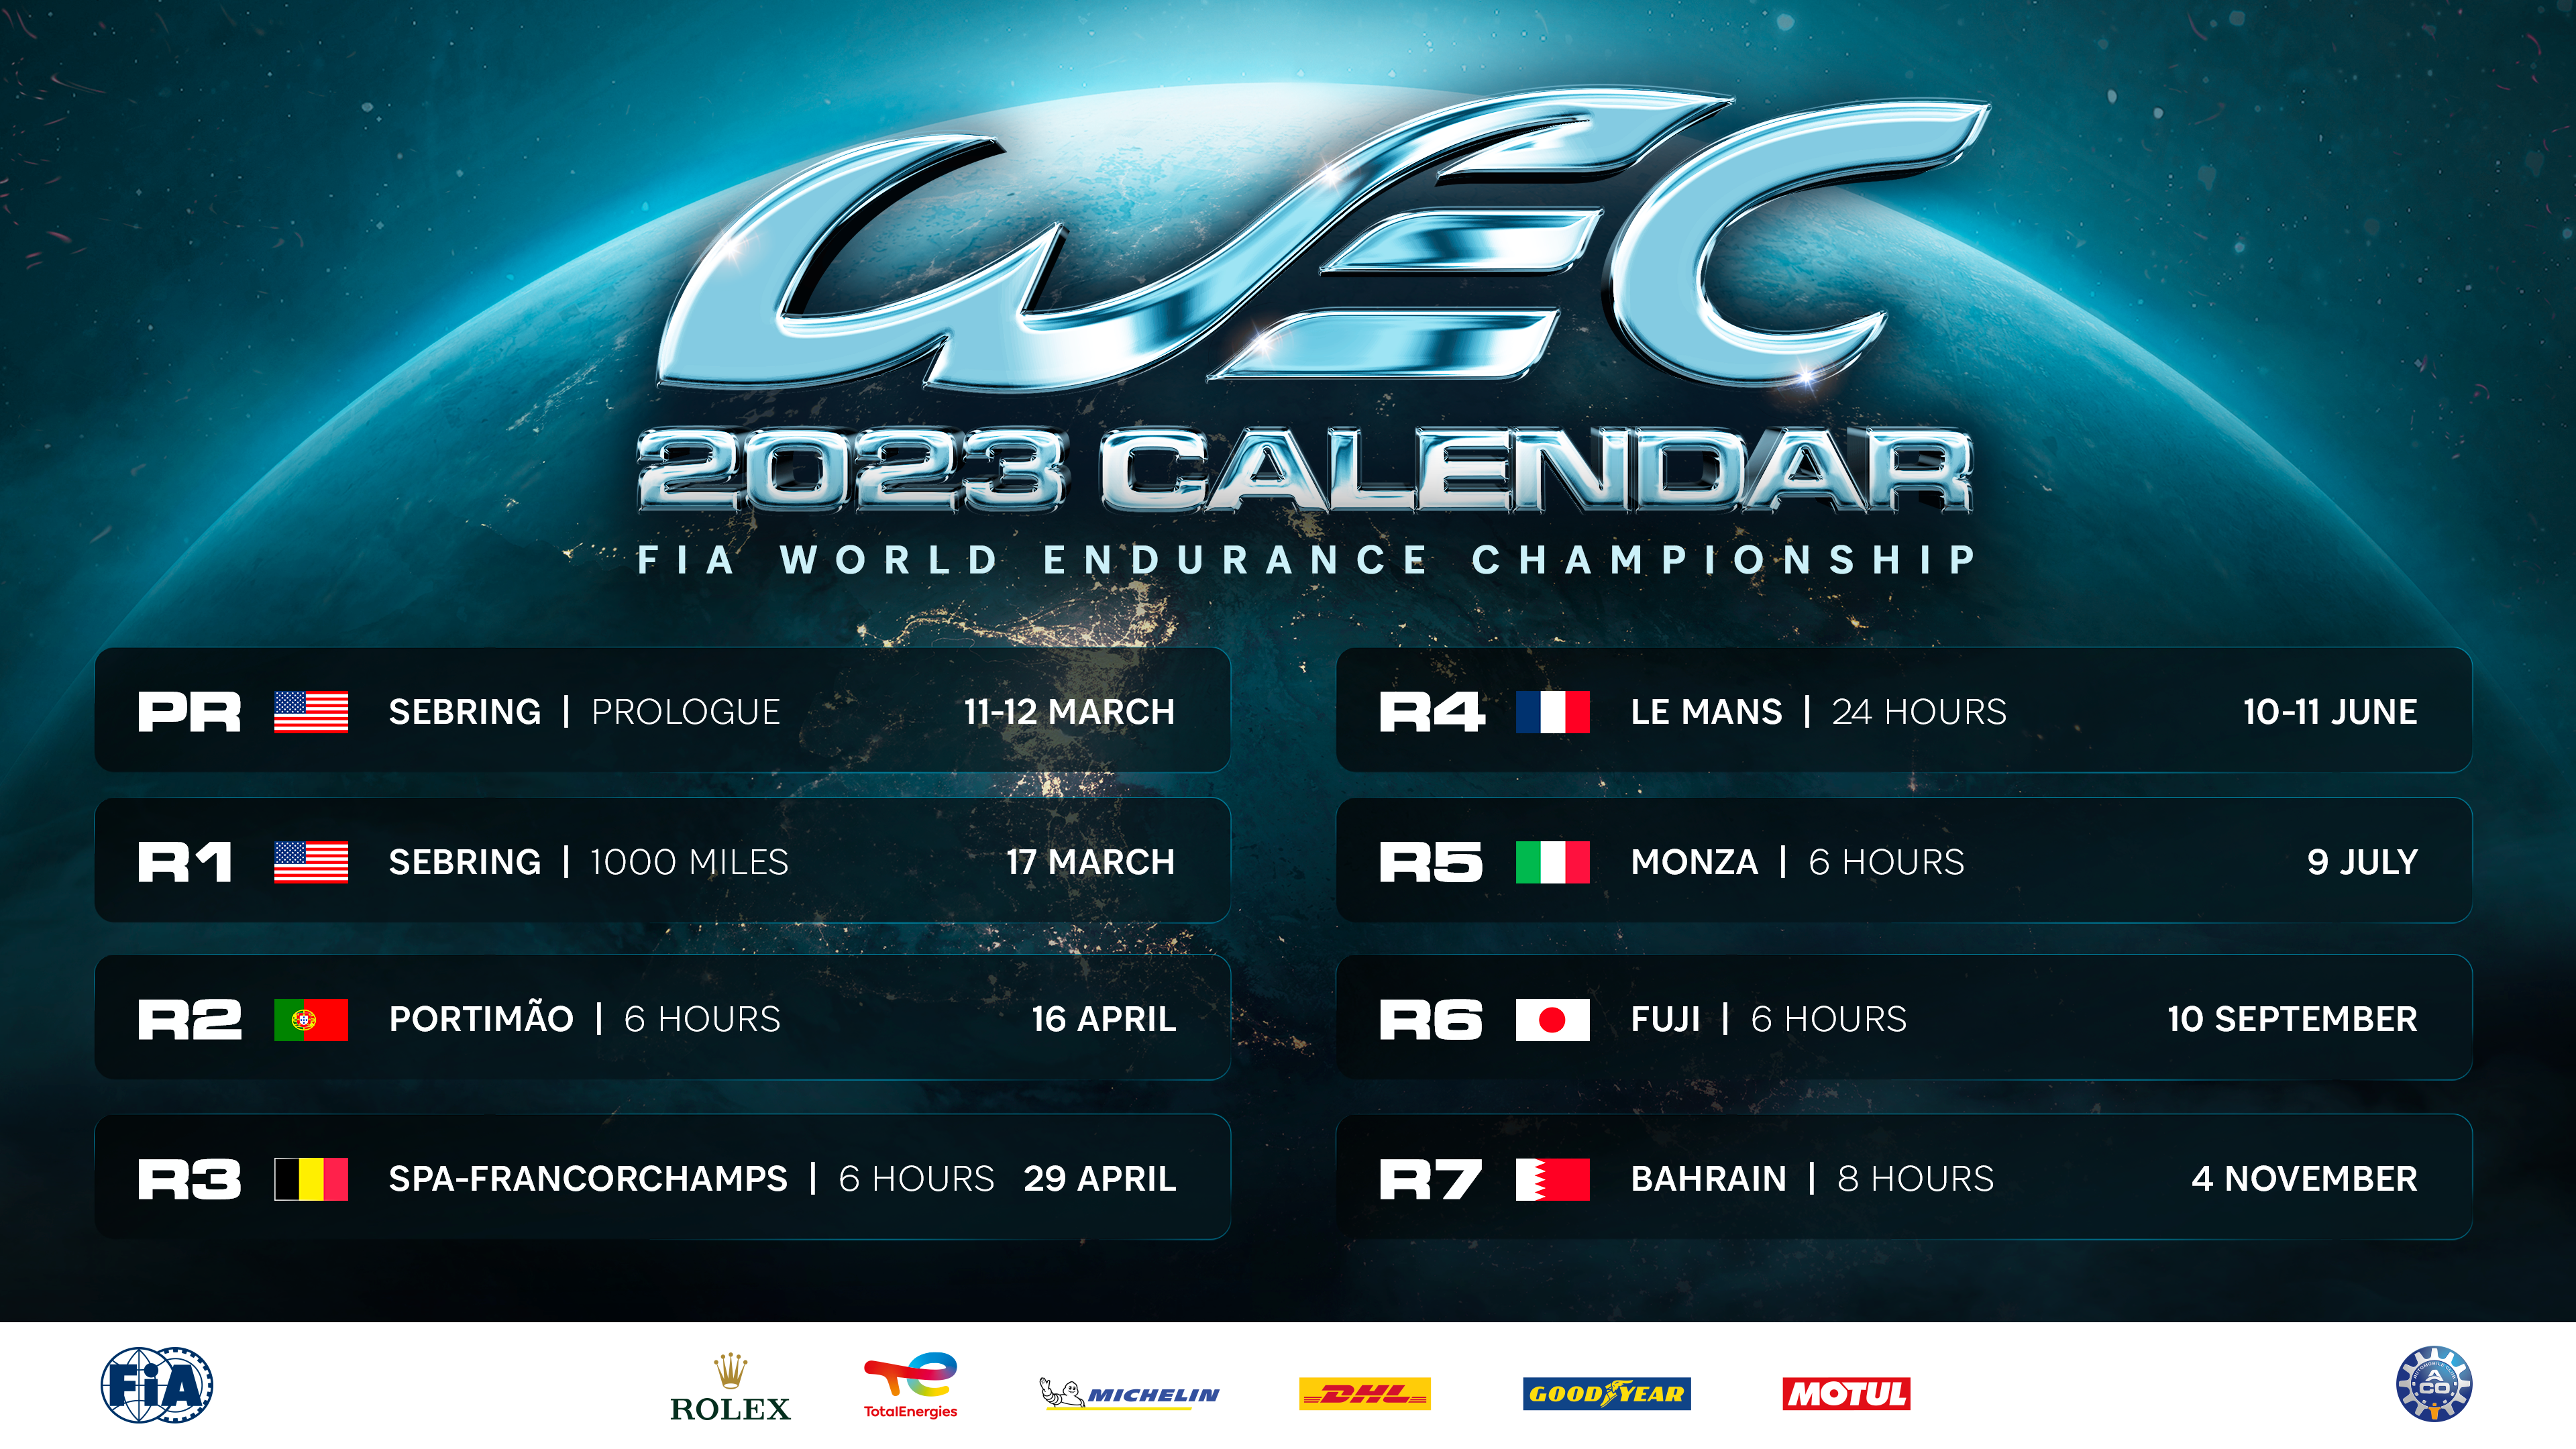 World Endurance Championship 2023